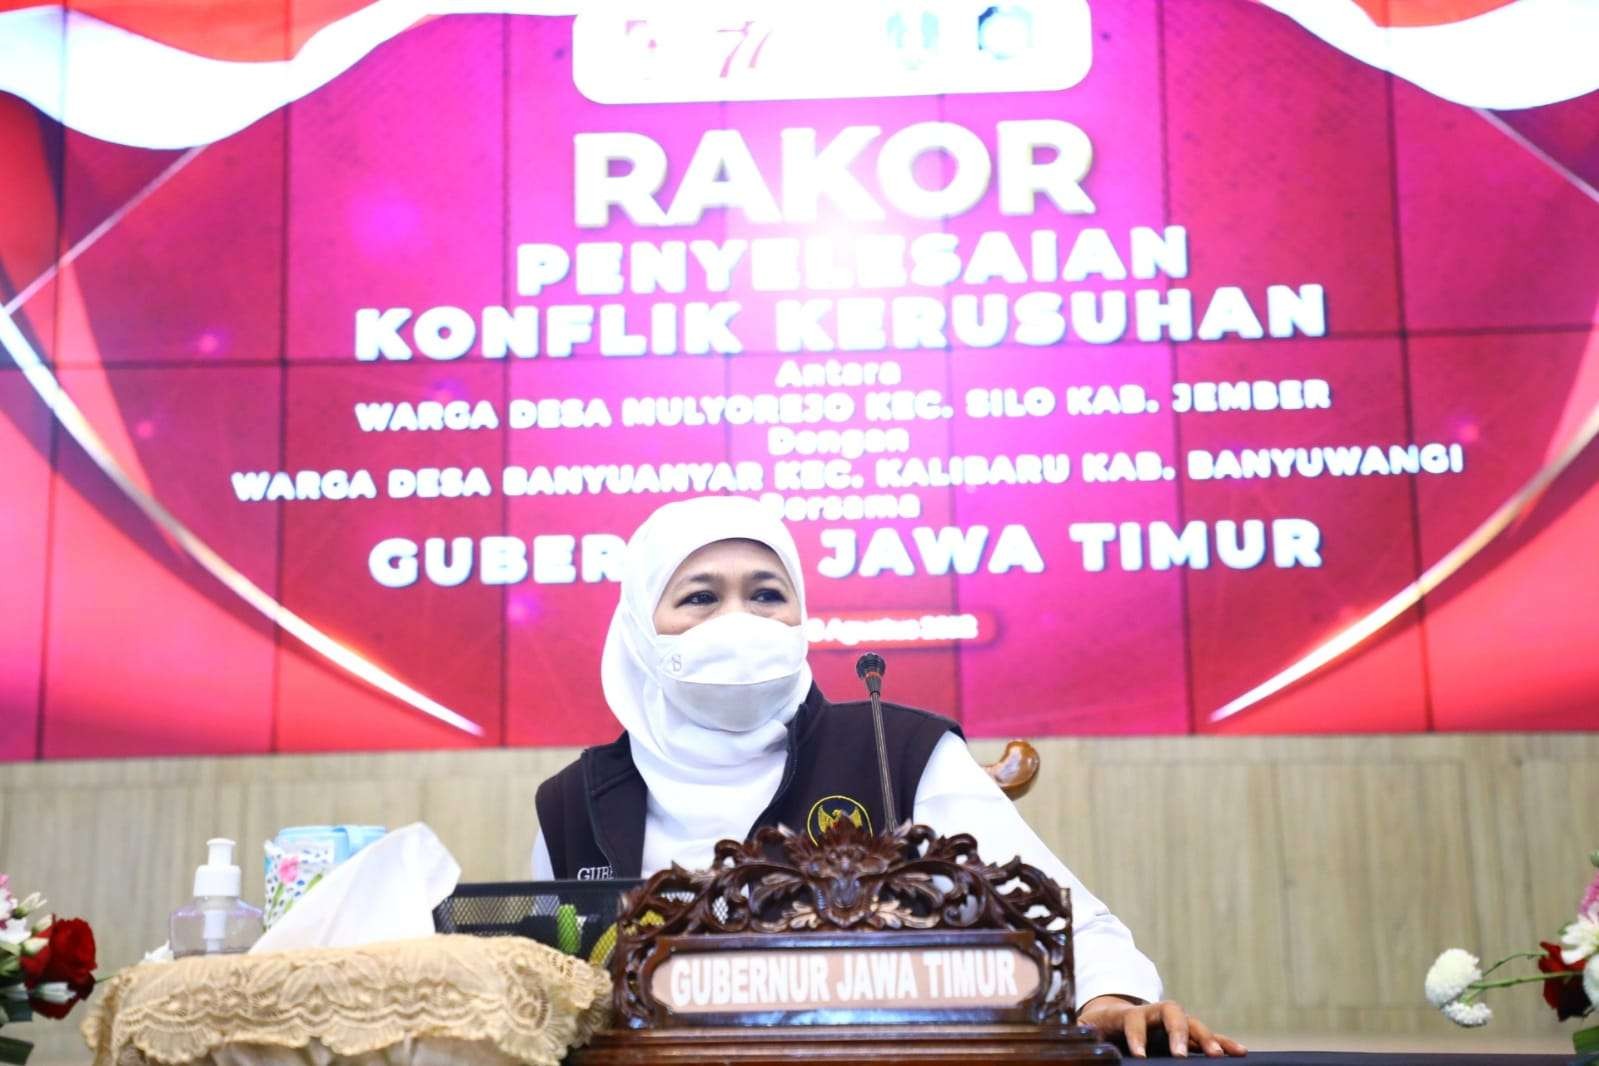 Gubernur Jawa Timur, Khofifah Indar Parawansa saat memimpin rakor penyelesaian konflik warga Jember dan Banyuwangi. (Foto: Humas Pemprov Jatim)